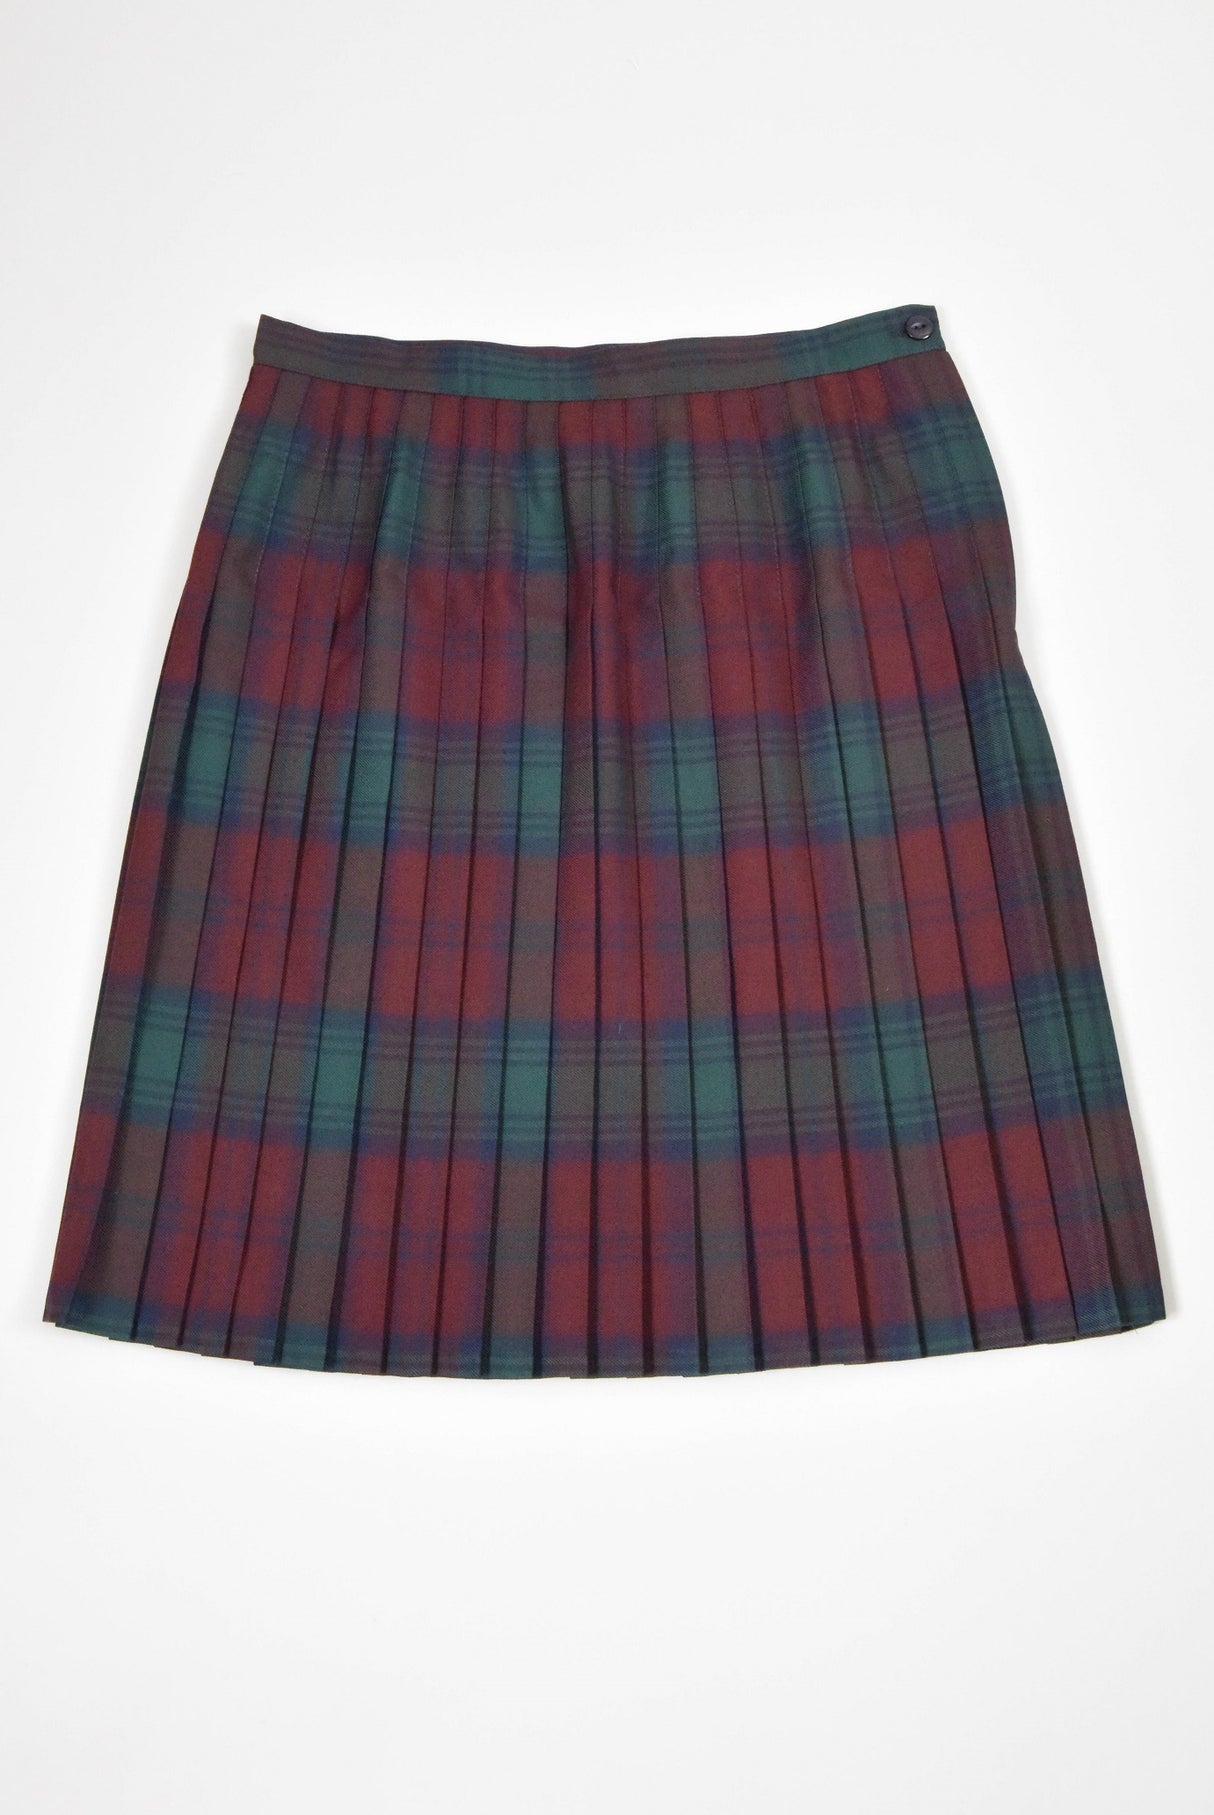 Bramdean Tartan Skirt